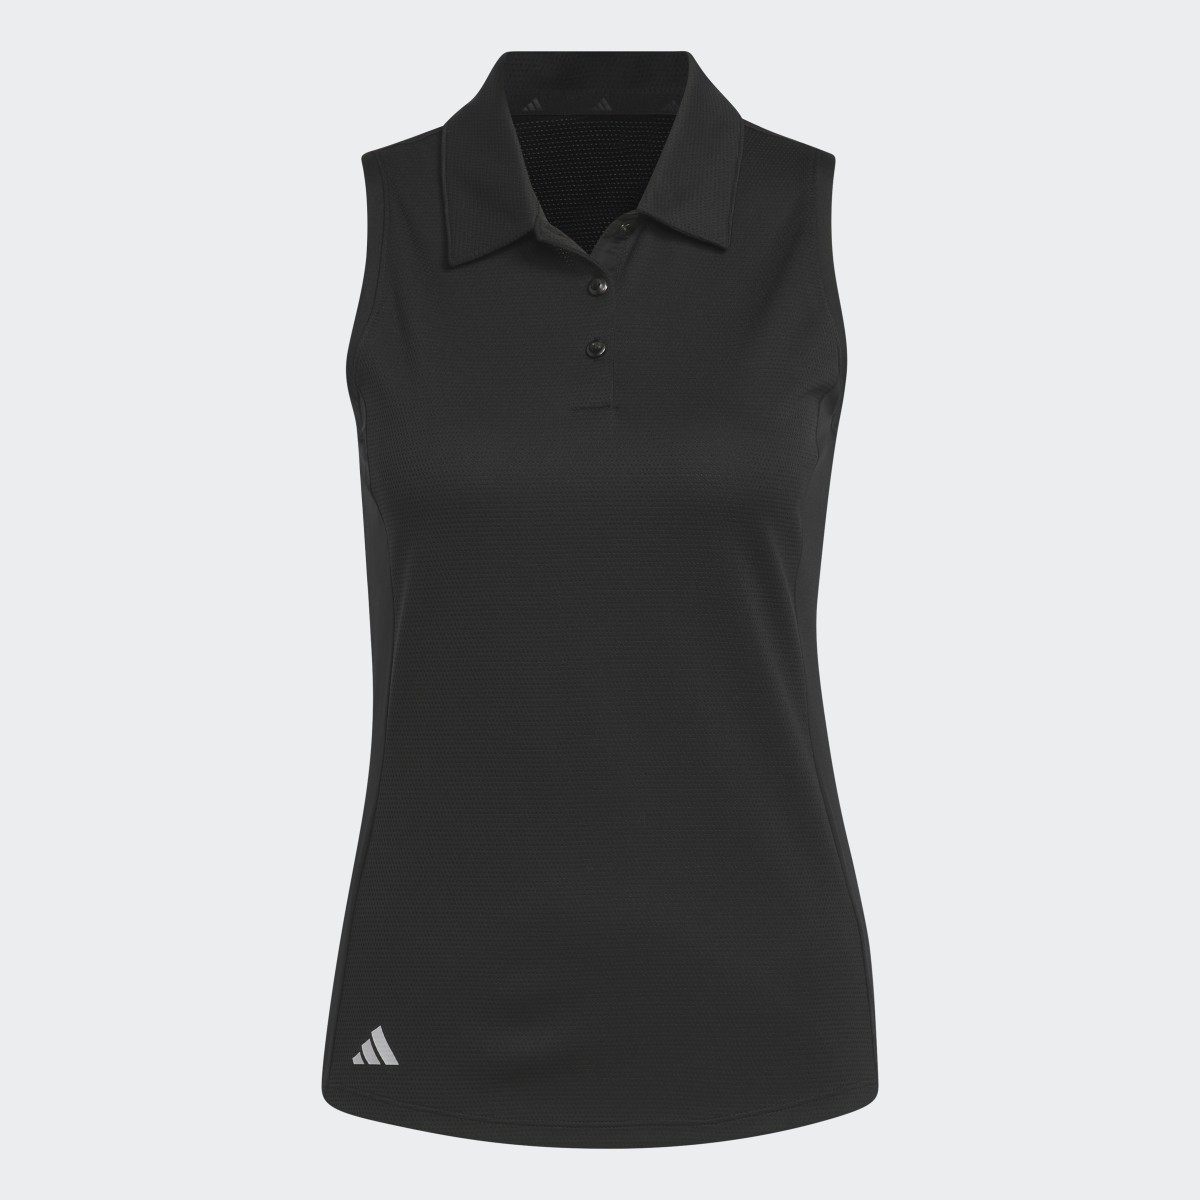 Adidas Texture Sleeveless Golf Polo Shirt. 6